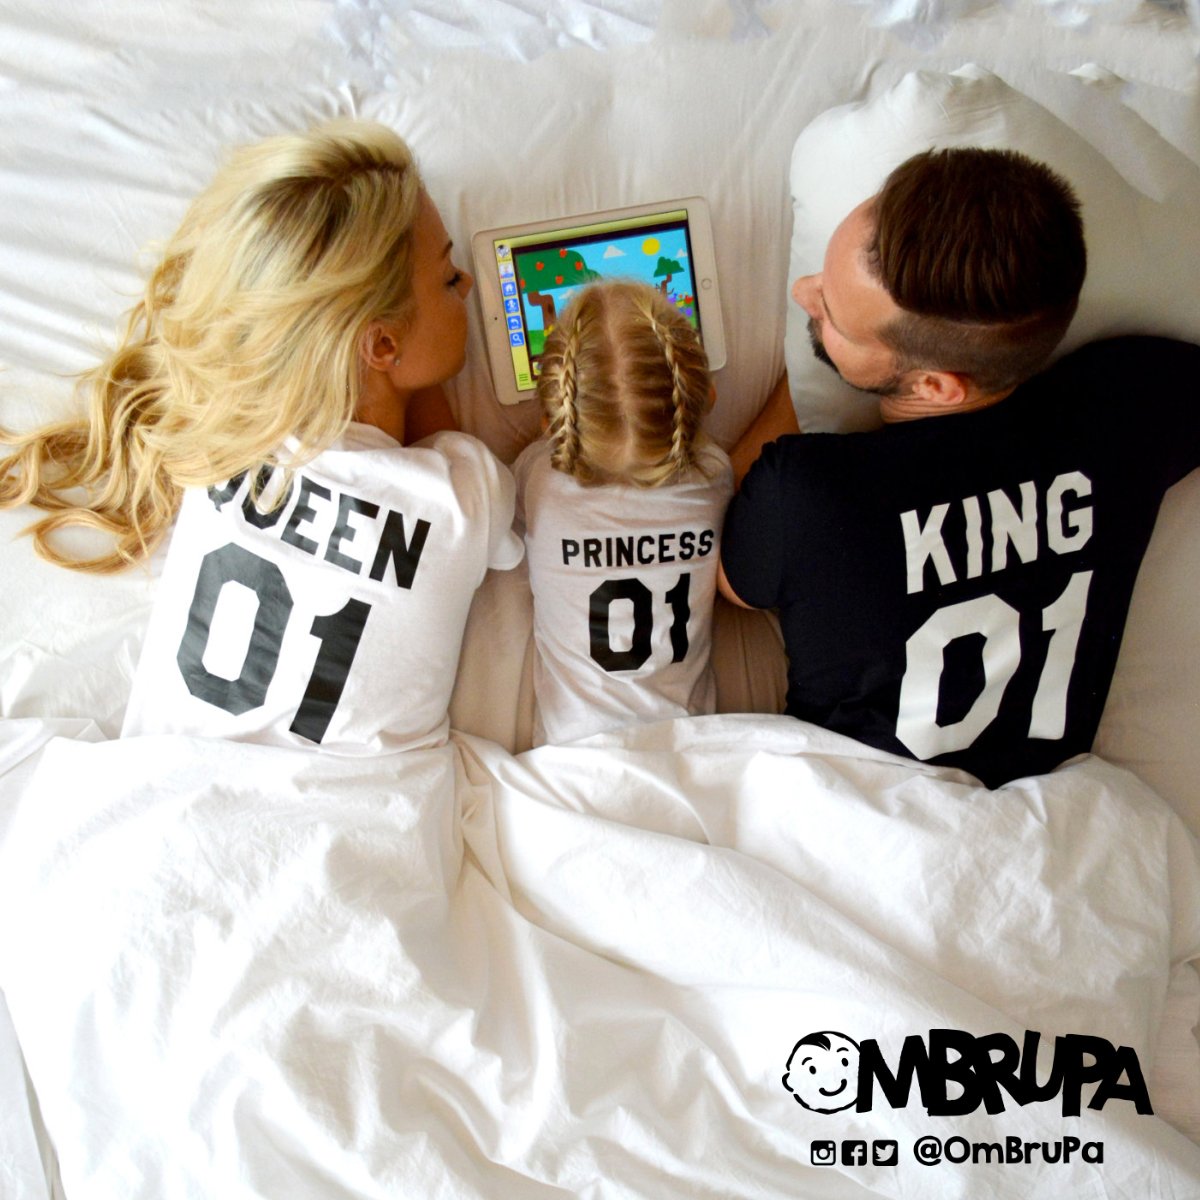 mármol mil millones Descanso OmBruPa on Twitter: "#Camisetas #Personalizadas #Familia #King #Queen  #Princess #Amor https://t.co/1P3QZow4KS" / Twitter